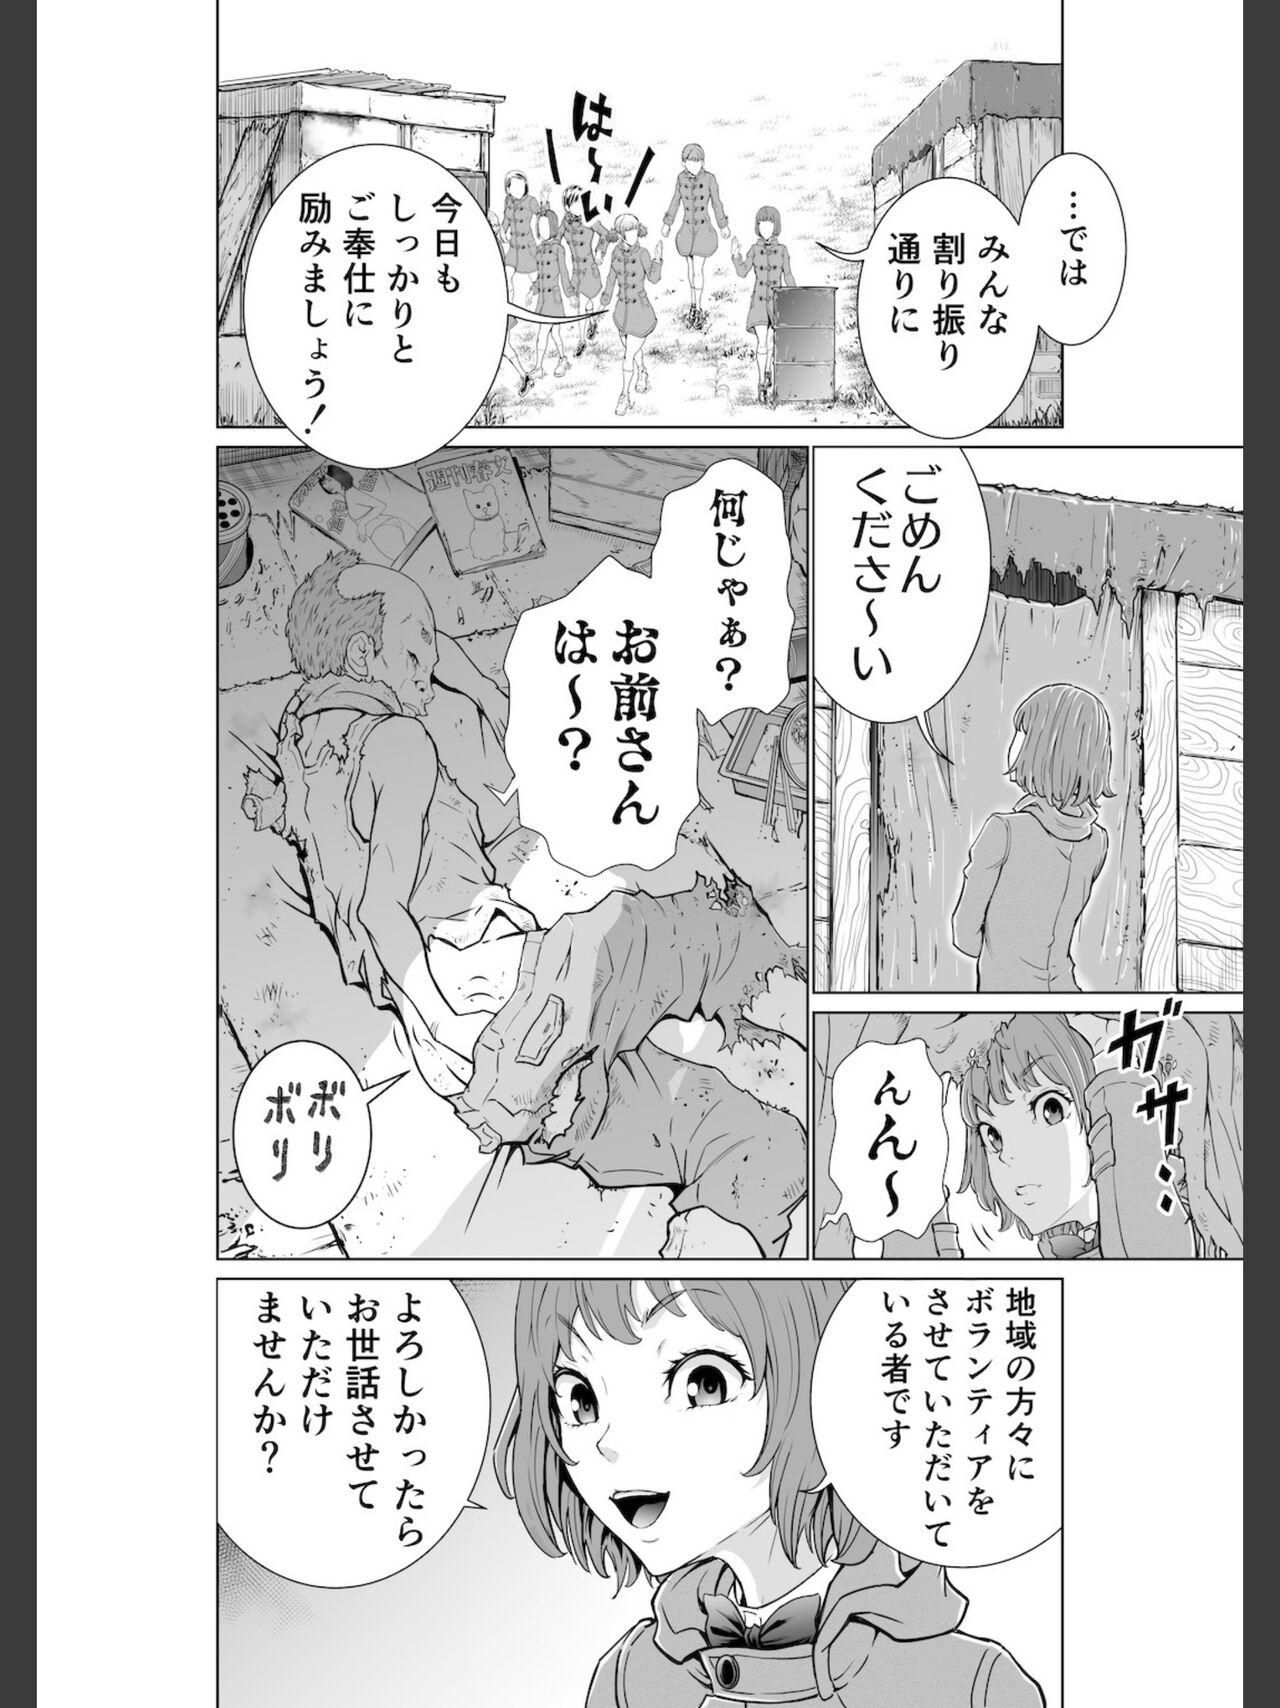 Toilet Kochira! ! Hōkago go hōshi kurabu katsudō nisshi + Extra Stories Newbie - Page 6